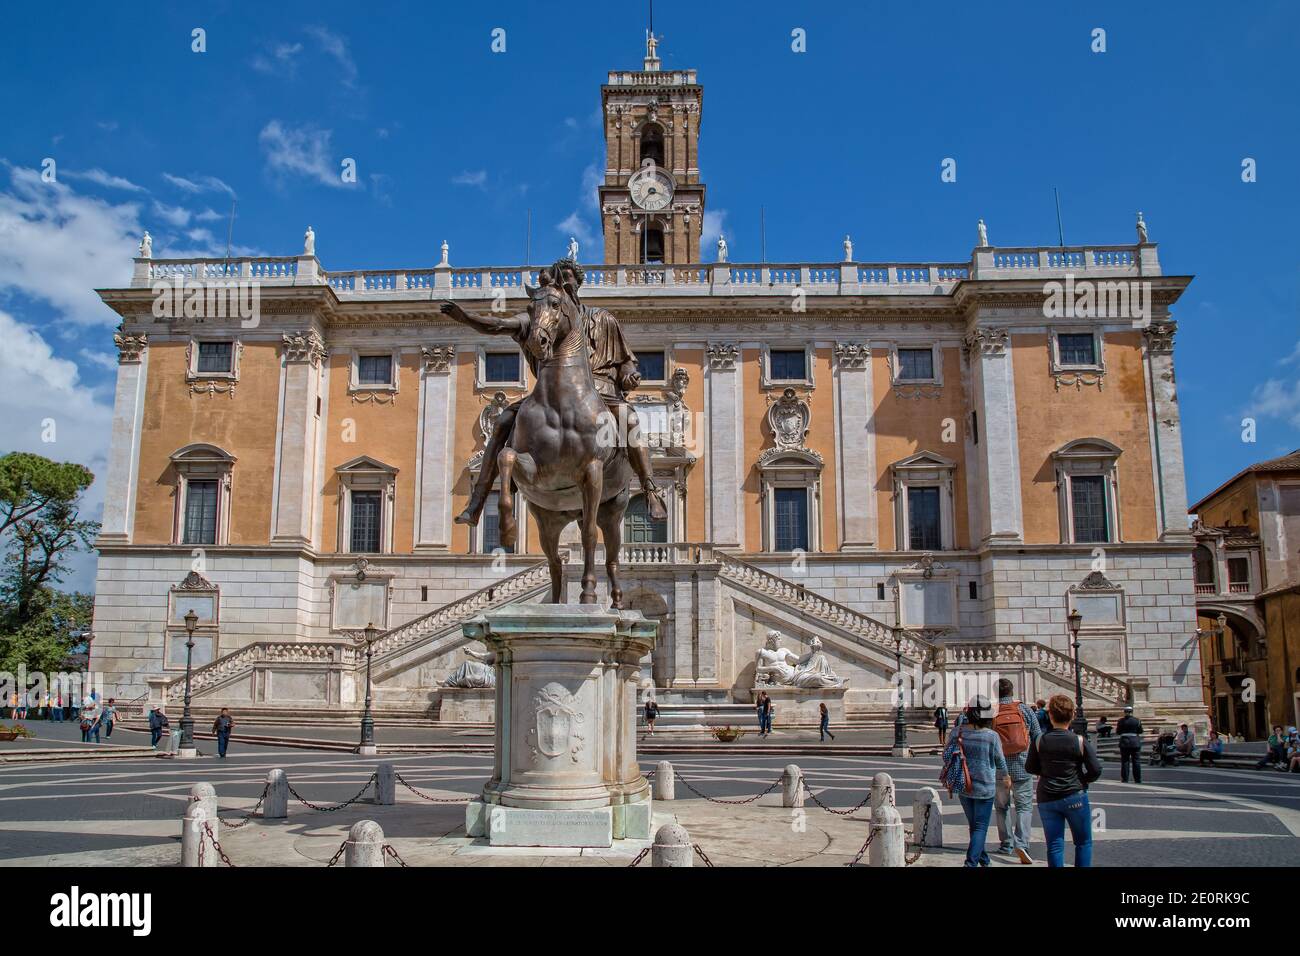 Bronze statue of the Roman emperor Marcus Aurelius.Tourist visits the Senatorial Palace on Capitoline Hill (Piazza del Campidoglio) in Rome, Italy Stock Photo